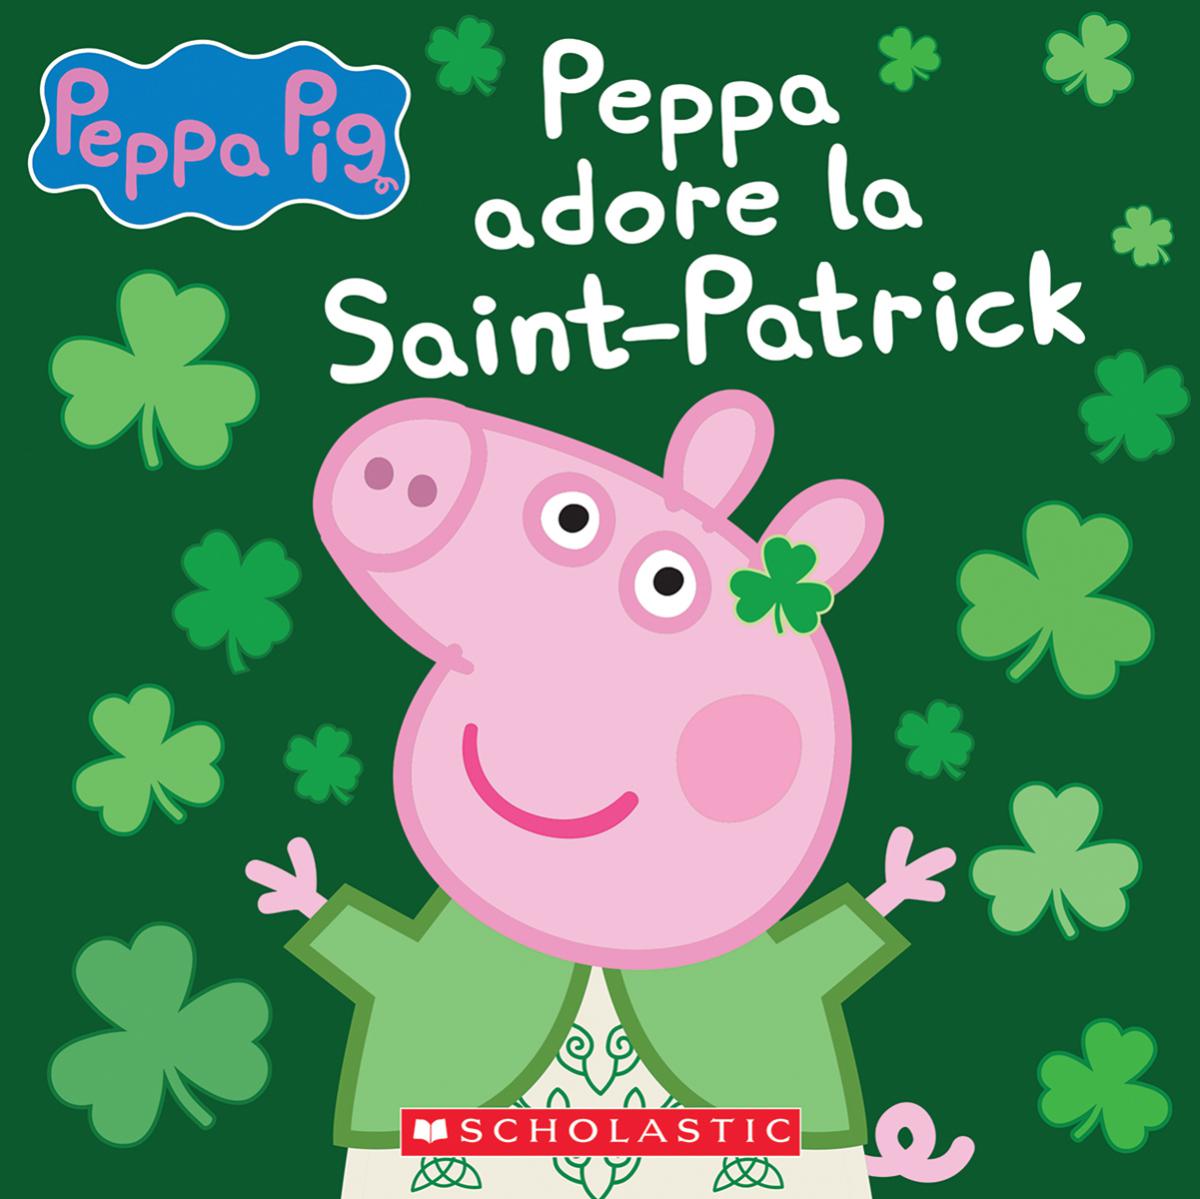  Peppa Pig : Peppa adore la Saint-Patrick 